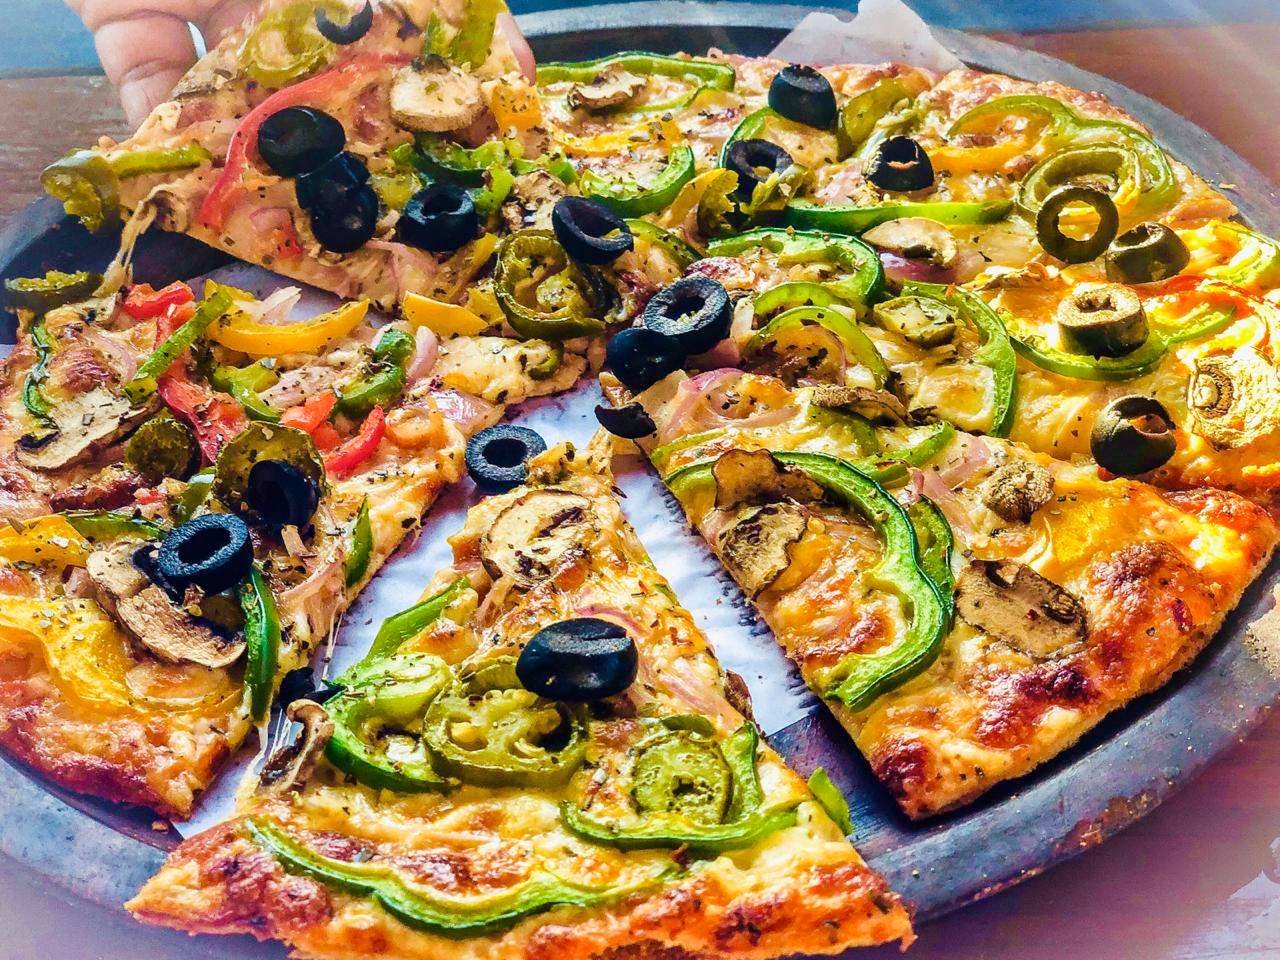 Dish,Food,Cuisine,Pizza,California-style pizza,Ingredient,Pizza cheese,Flatbread,Italian food,Junk food